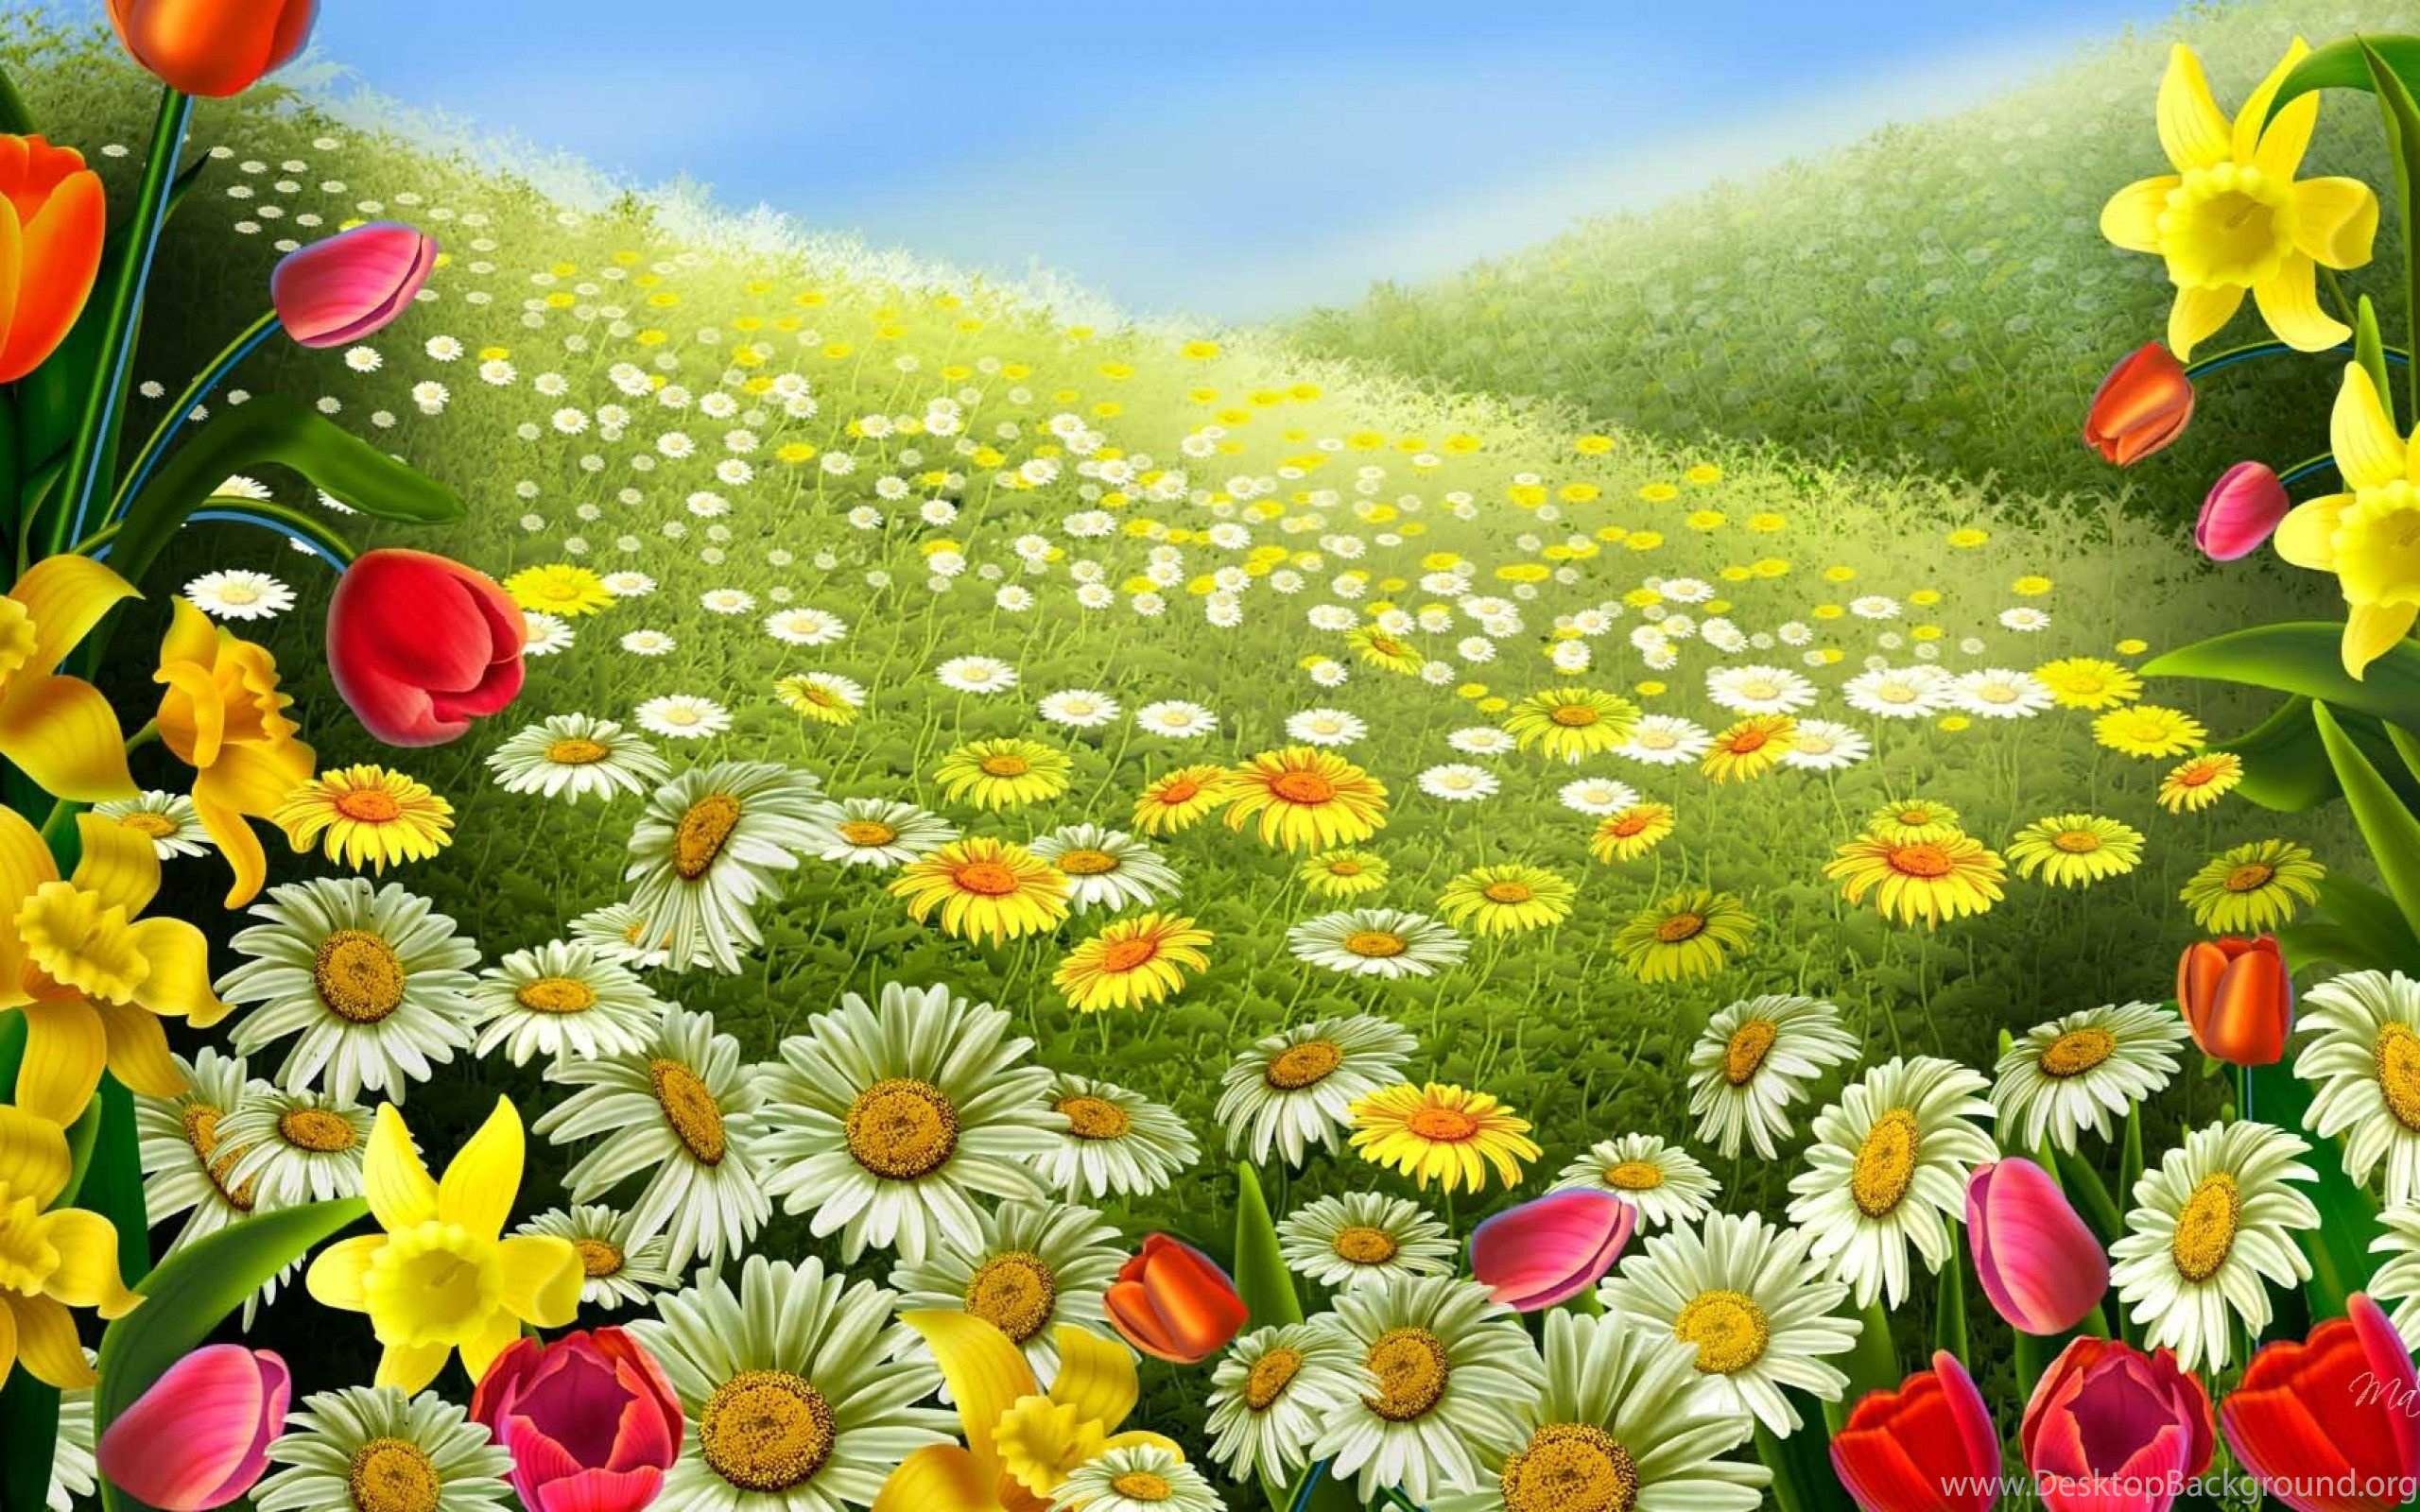 Flower Garden Wallpaper HD For Desktop Download High Quality Desktop Background